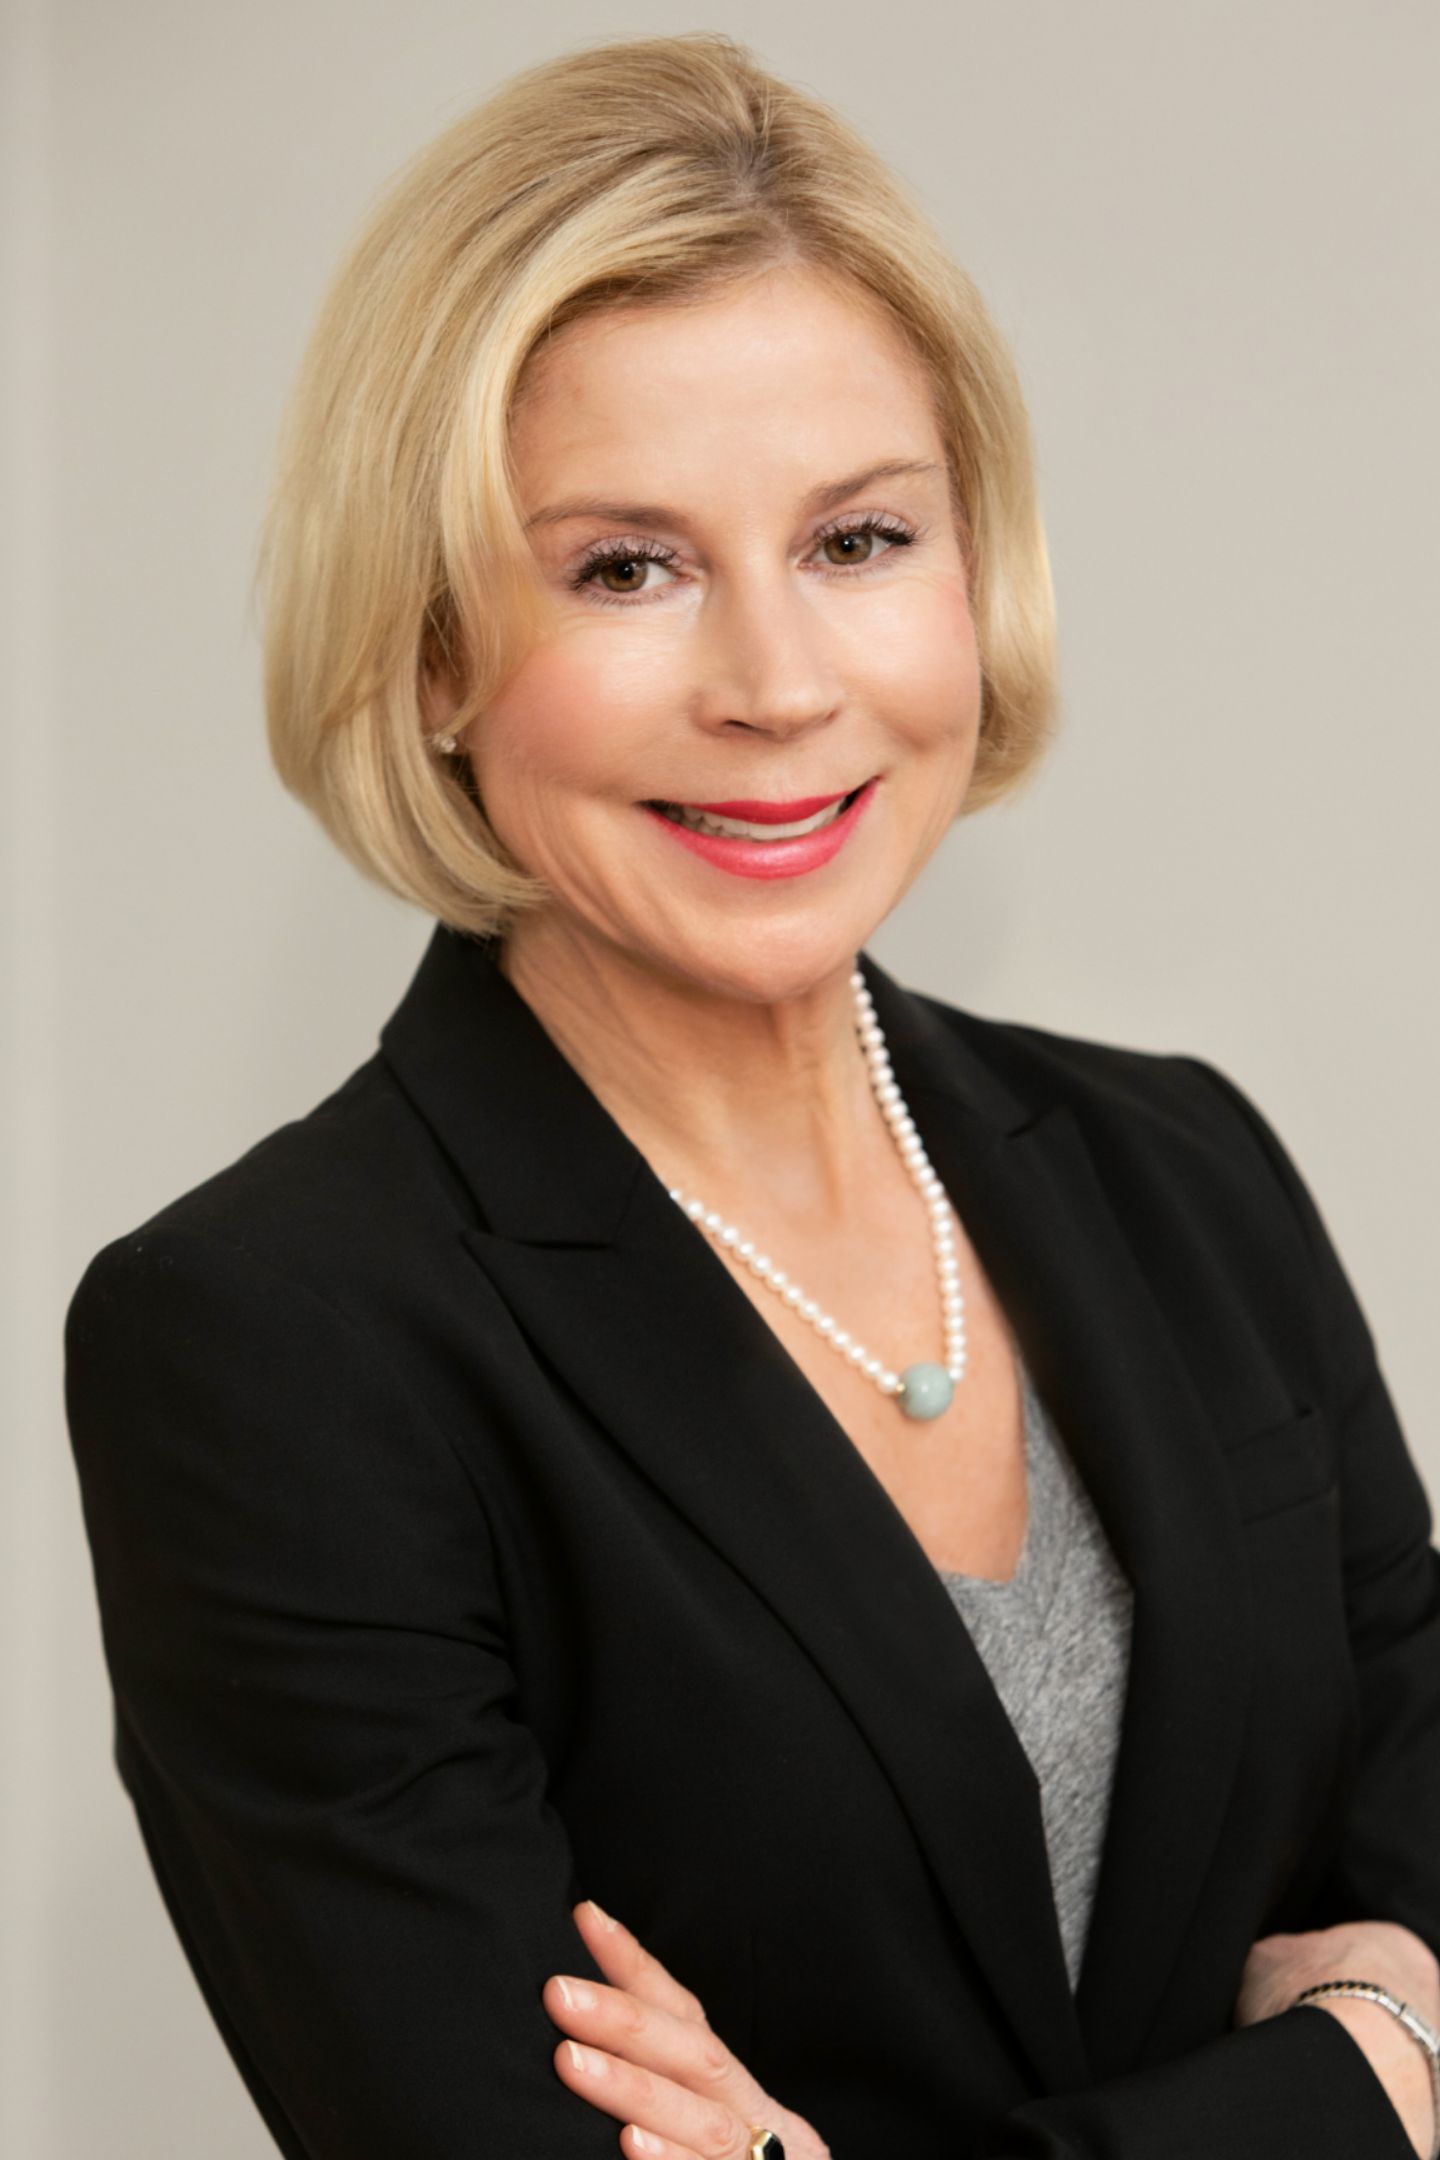 Valerie Engel, Real Estate Agent - Saint Louis, MO - Coldwell Banker Gundaker